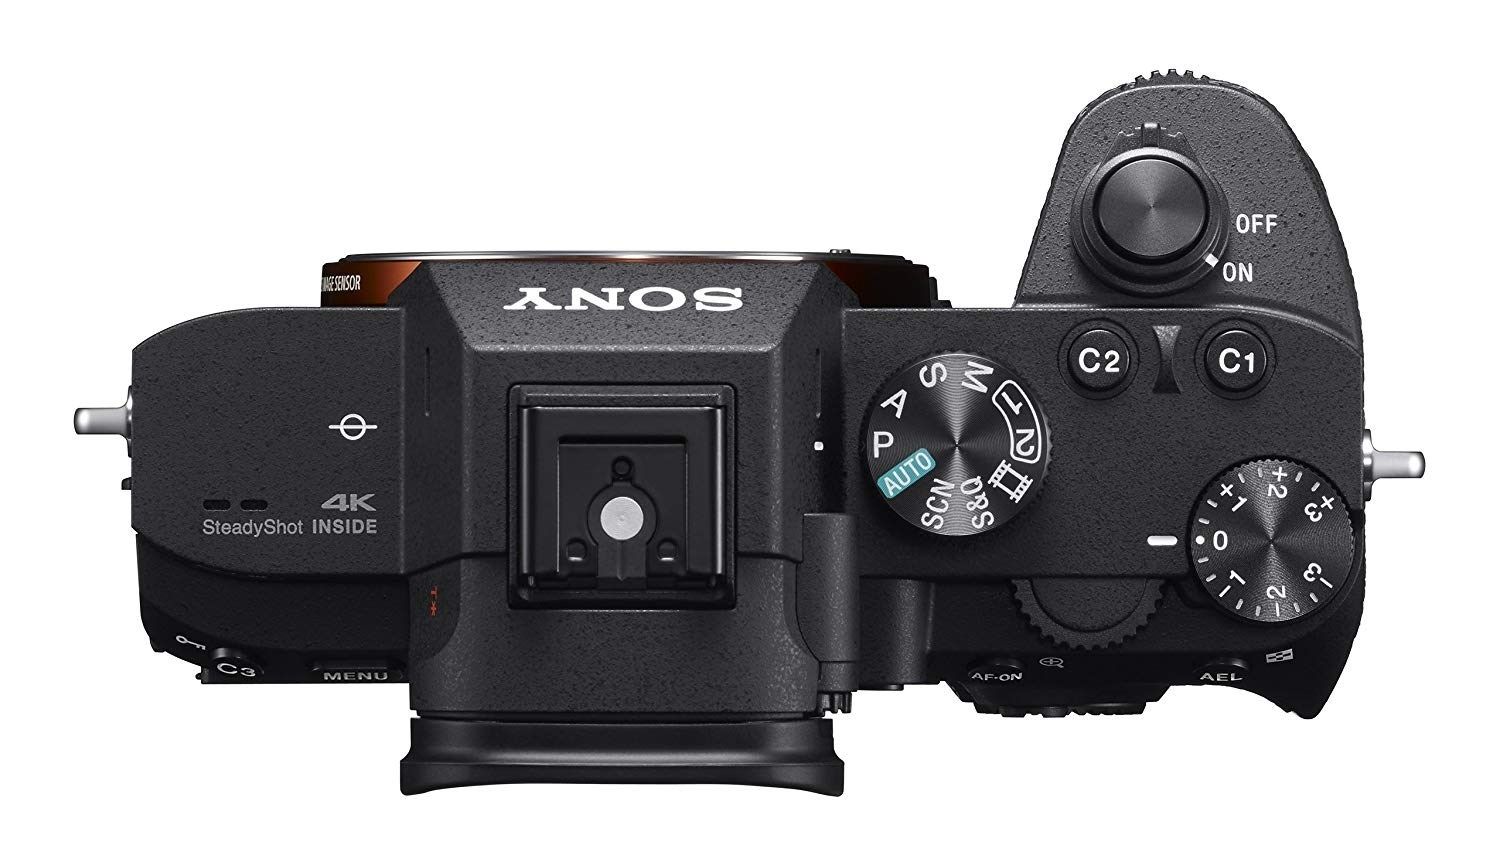 Sony Alpha a7 III Mirrorless Camera - Body only